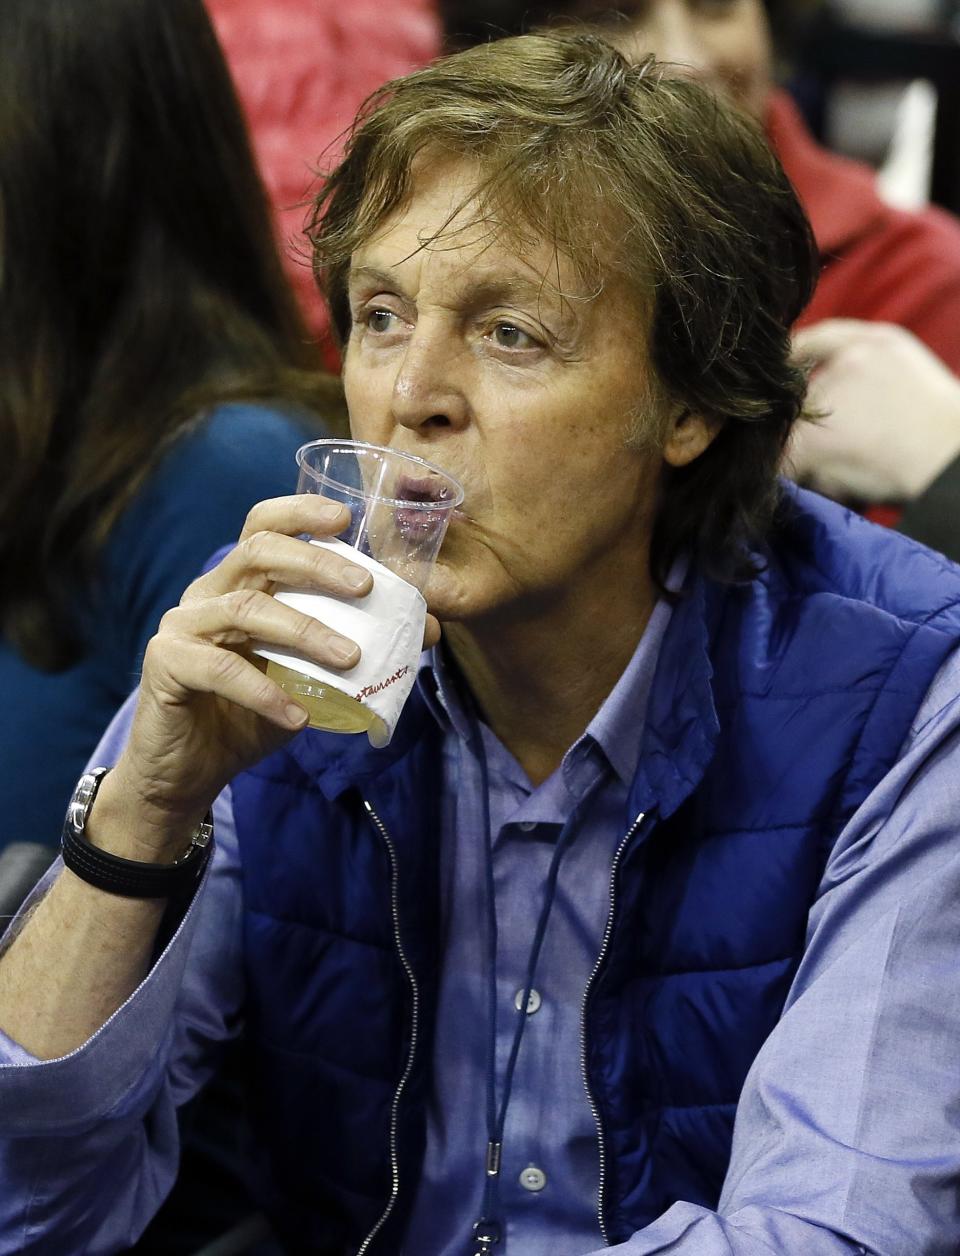 British musician Paul McCartney drinks ahead of the Atlanta Hawks versus Brooklyn Nets NBA basketball game at the O2 Arena in London, Thursday, Jan. 16, 2014. (AP Photo/Kirsty Wigglesworth)